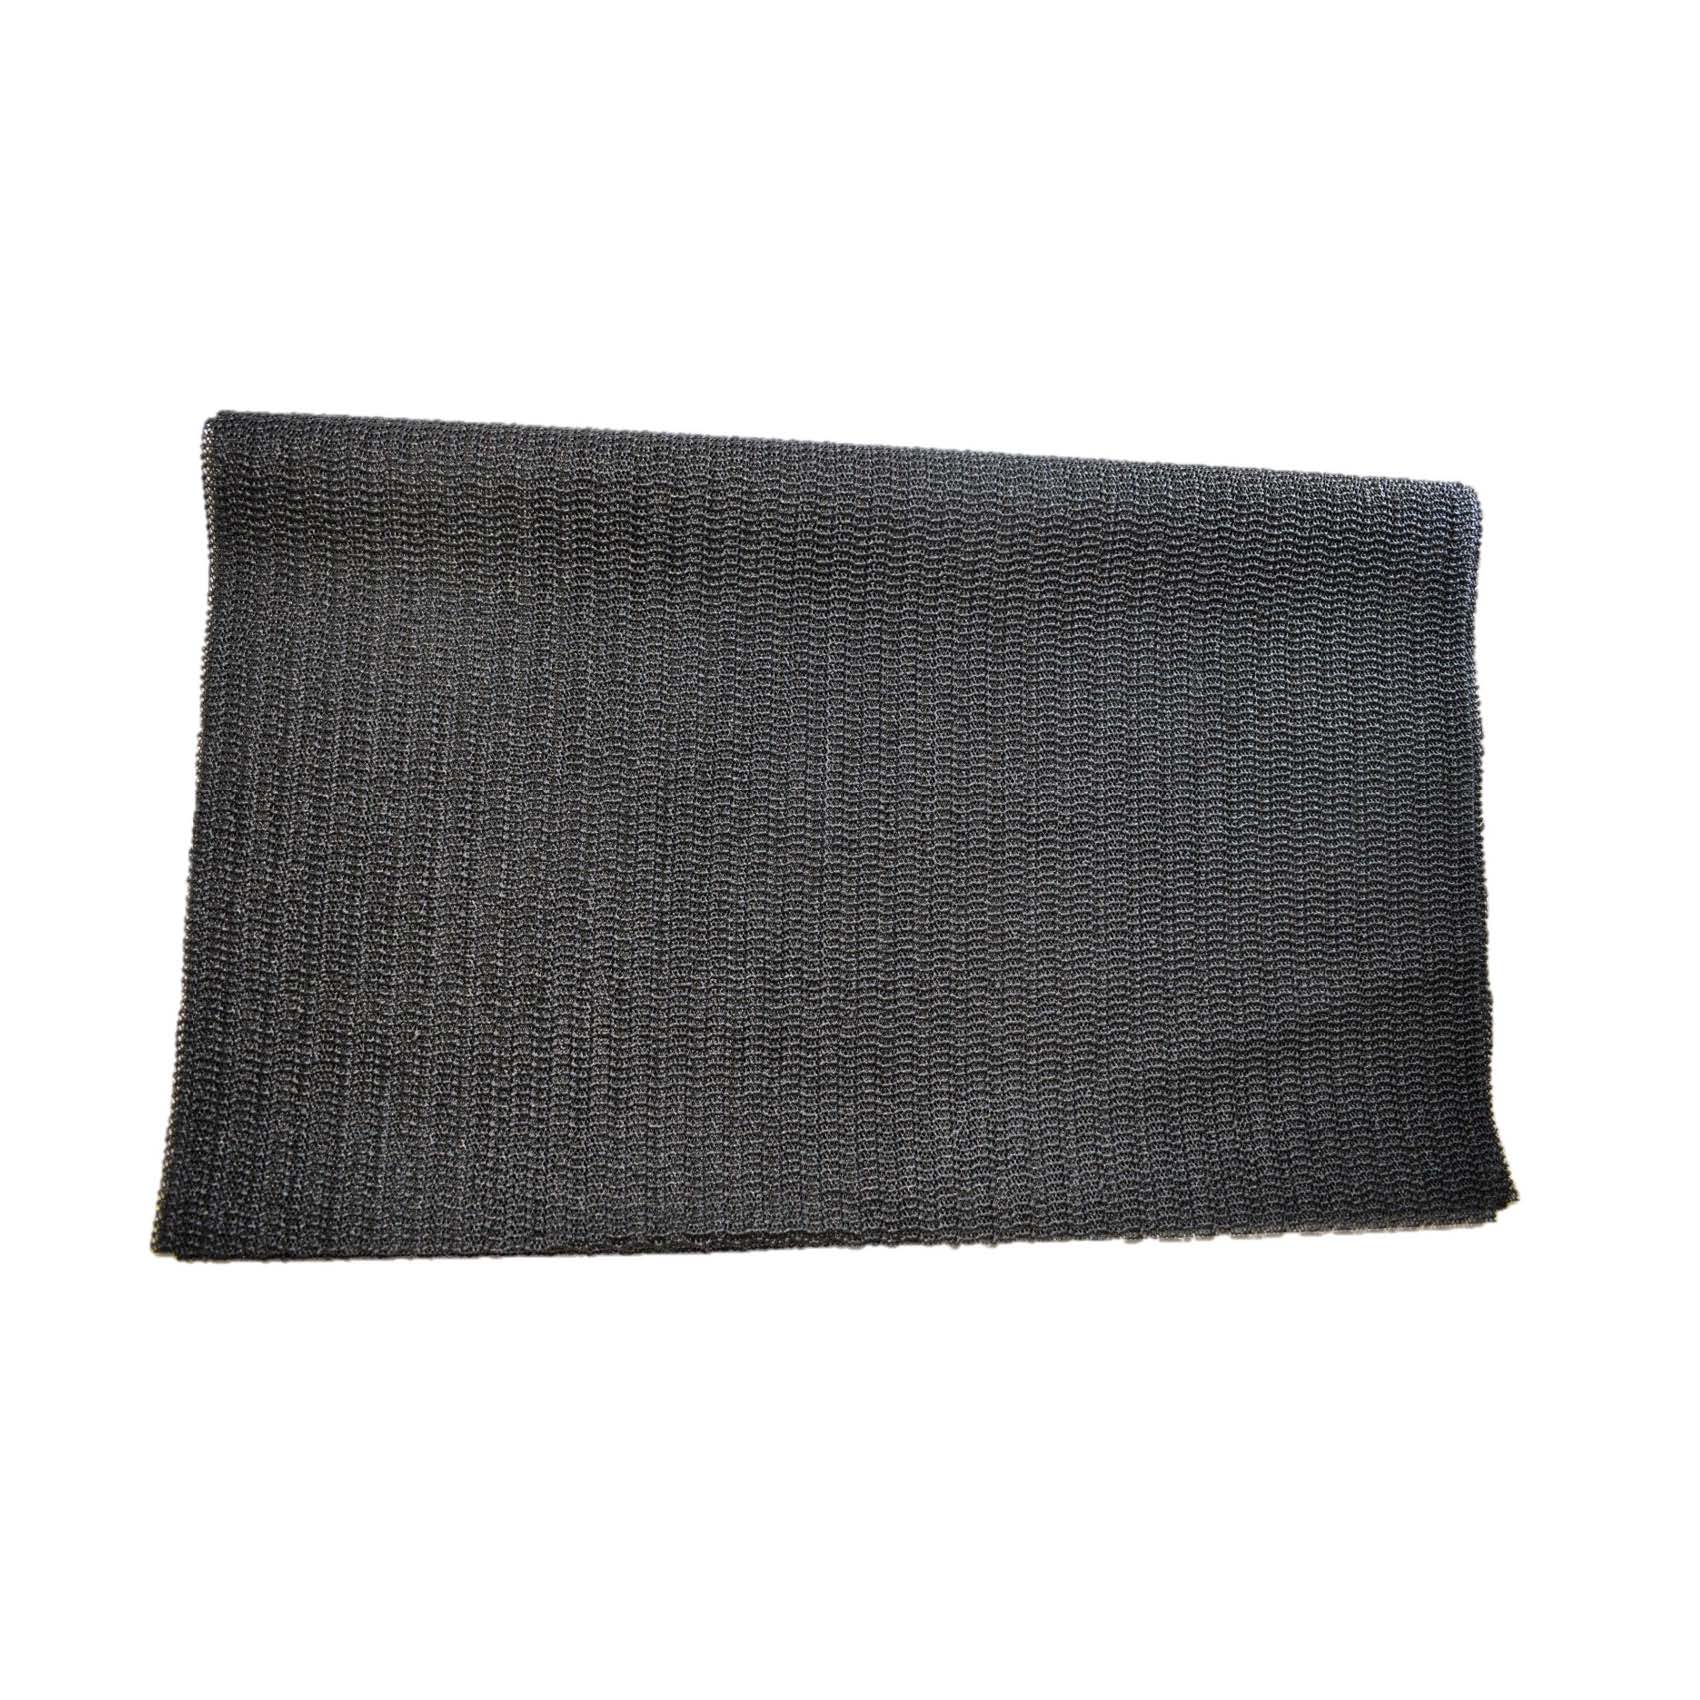 Tissu ANTI-DERAPANT noir - Autres tissus bagagerie